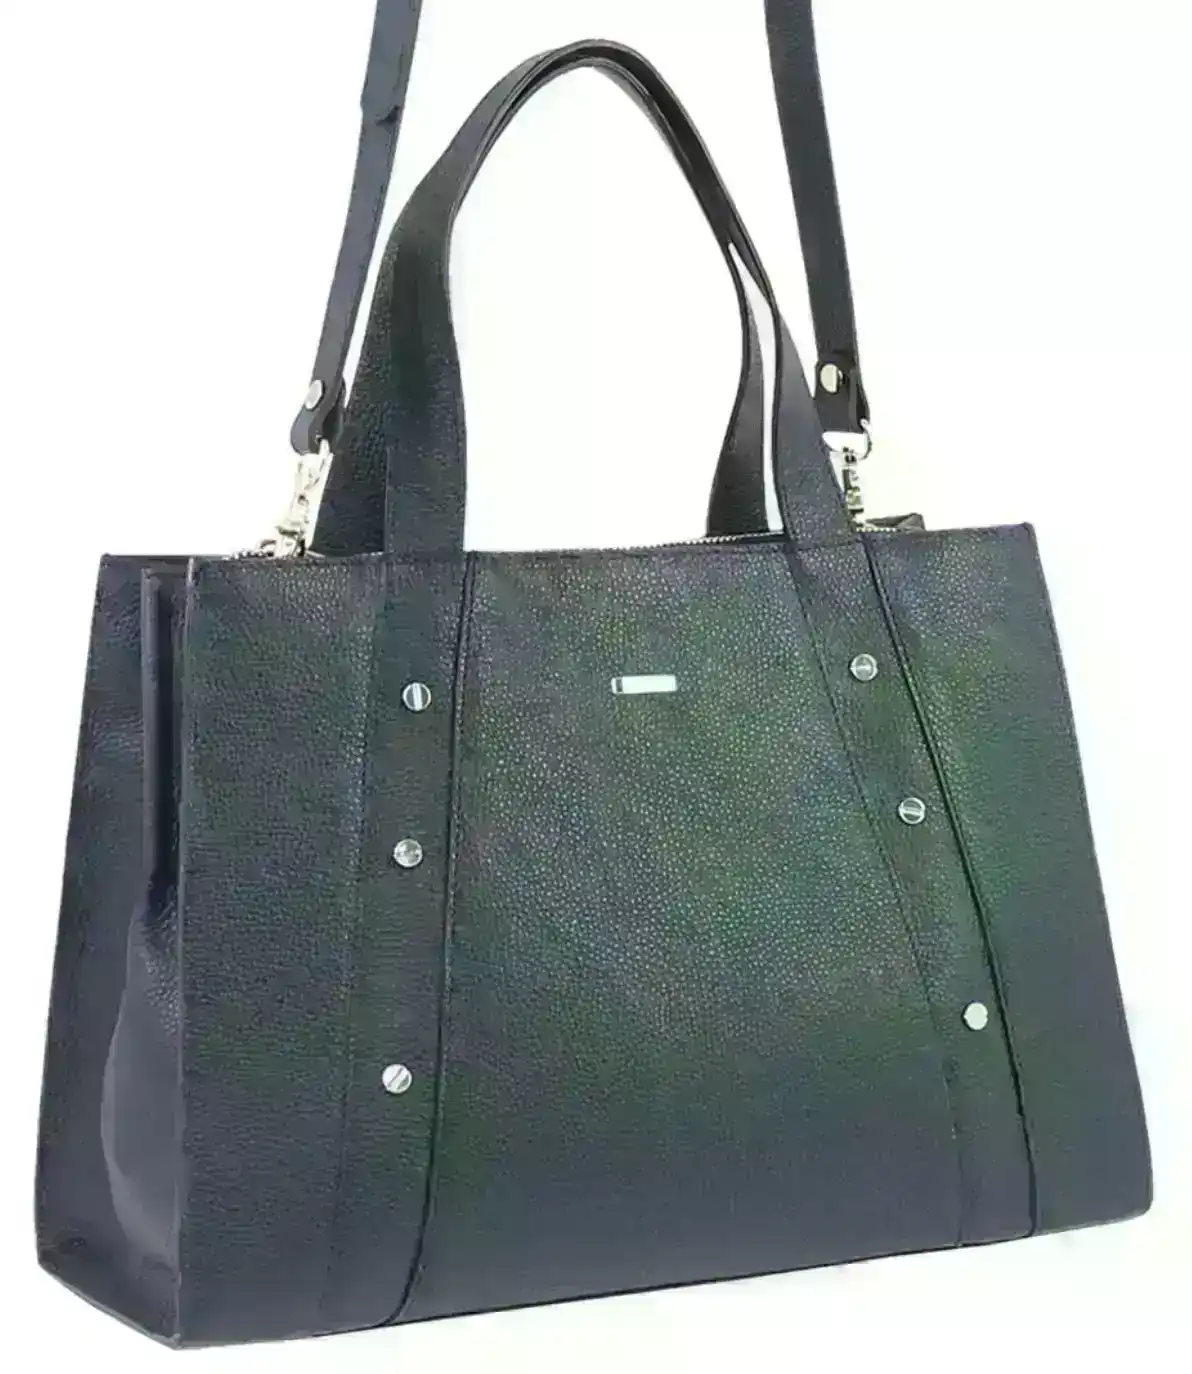 Morrissey Italian Womens Structured Leather Bag Tote Handbag Messenger - Navy